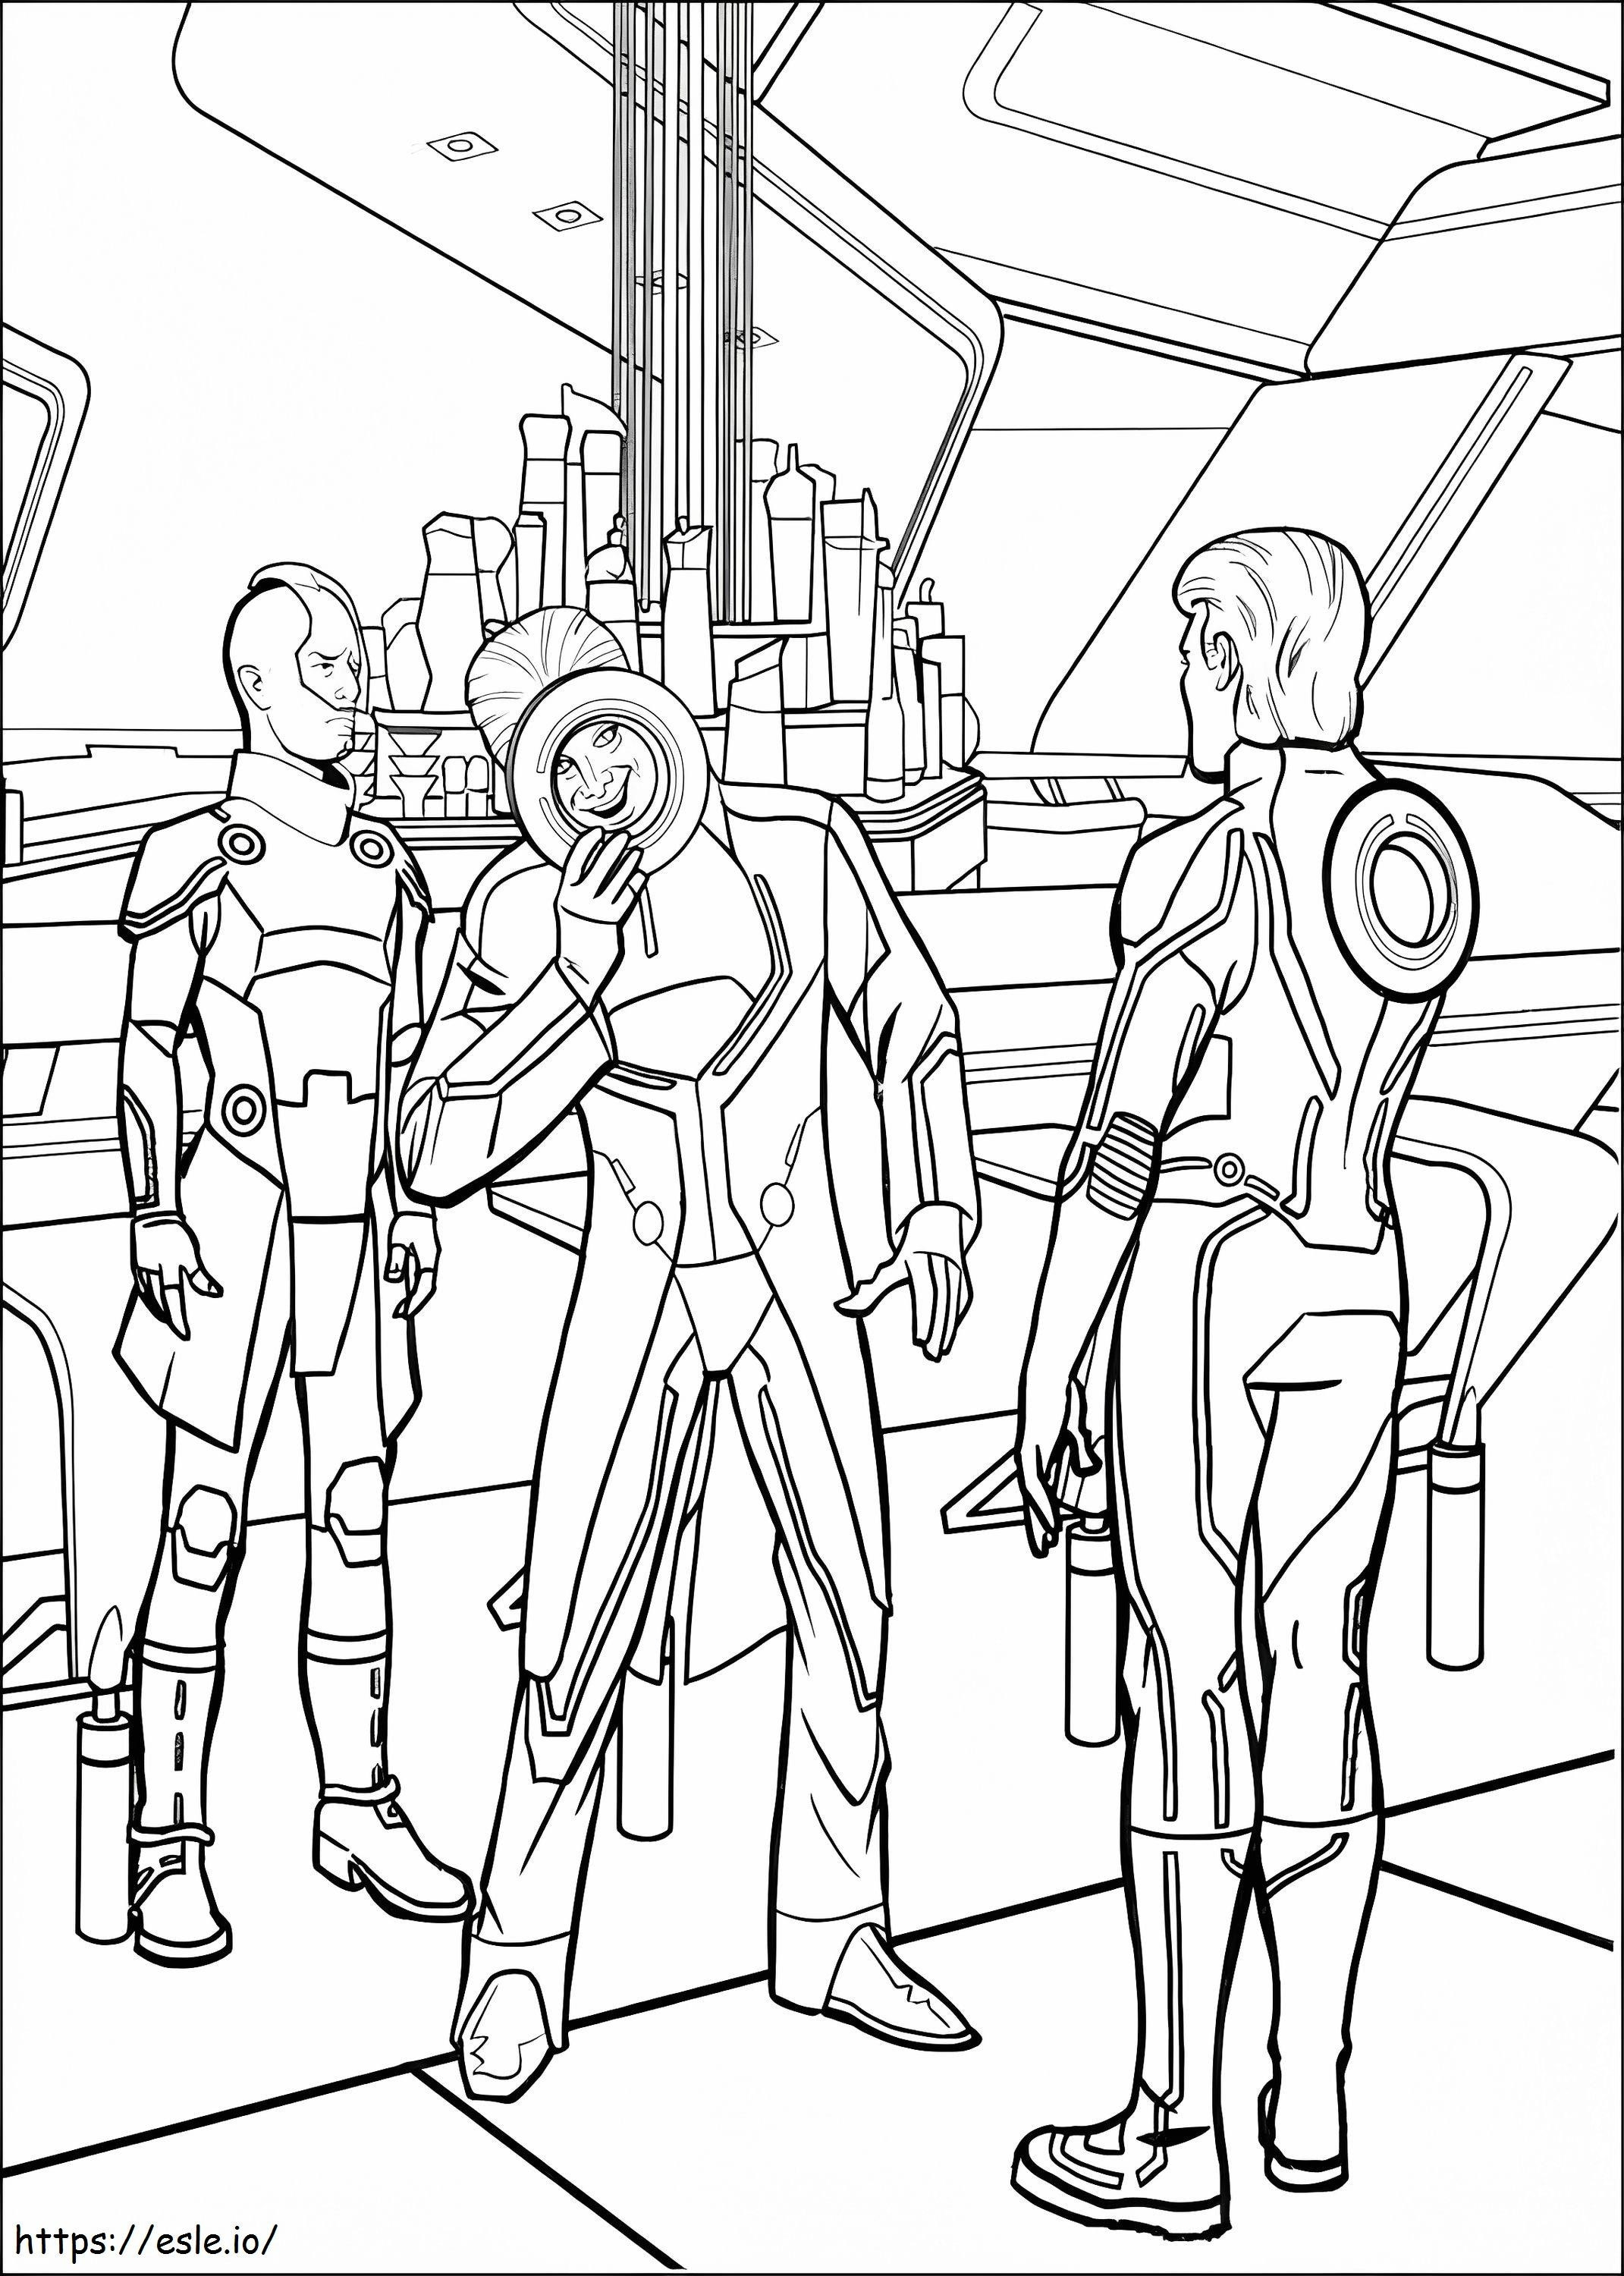 Happy Tron coloring page